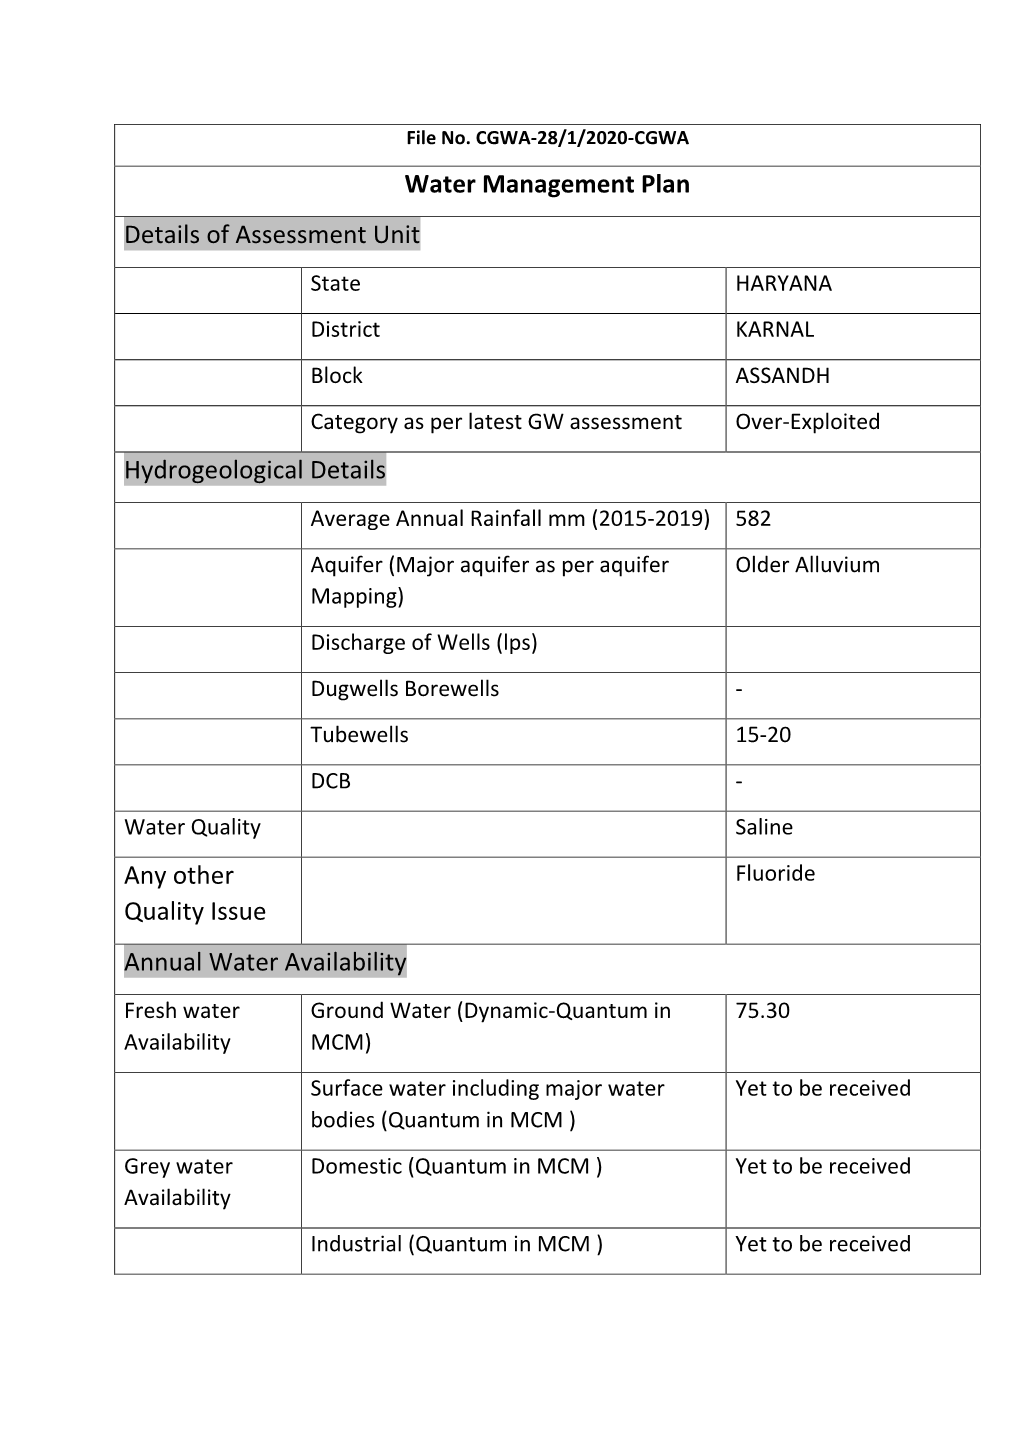 Water Management Plan Details of Assessment Unit Hydrogeological